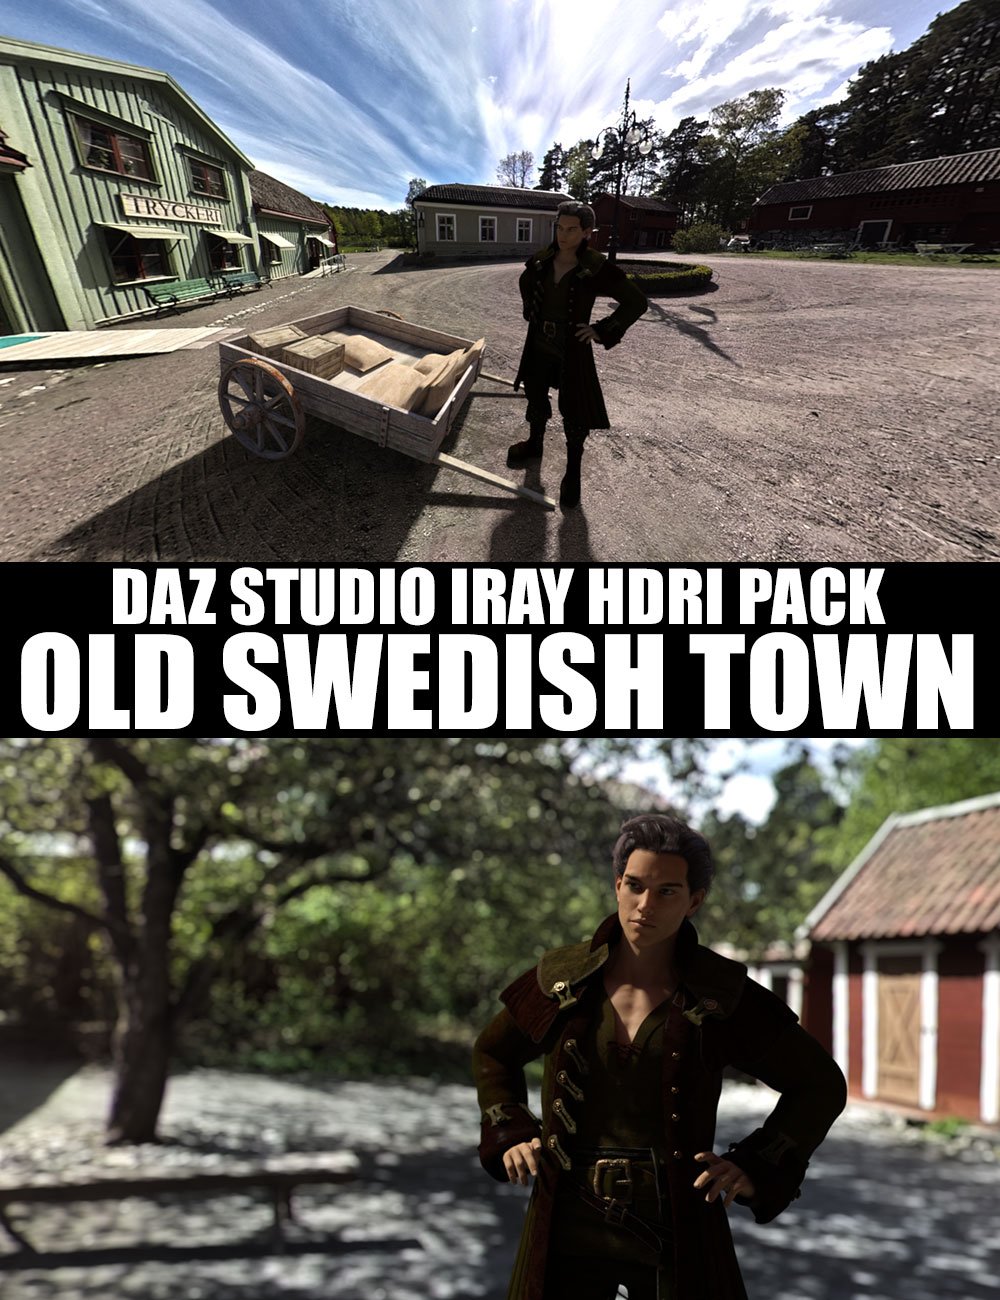 Old Swedish Town - DAZ Studio Iray HDRI Pack by: Dreamlight, 3D Models by Daz 3D